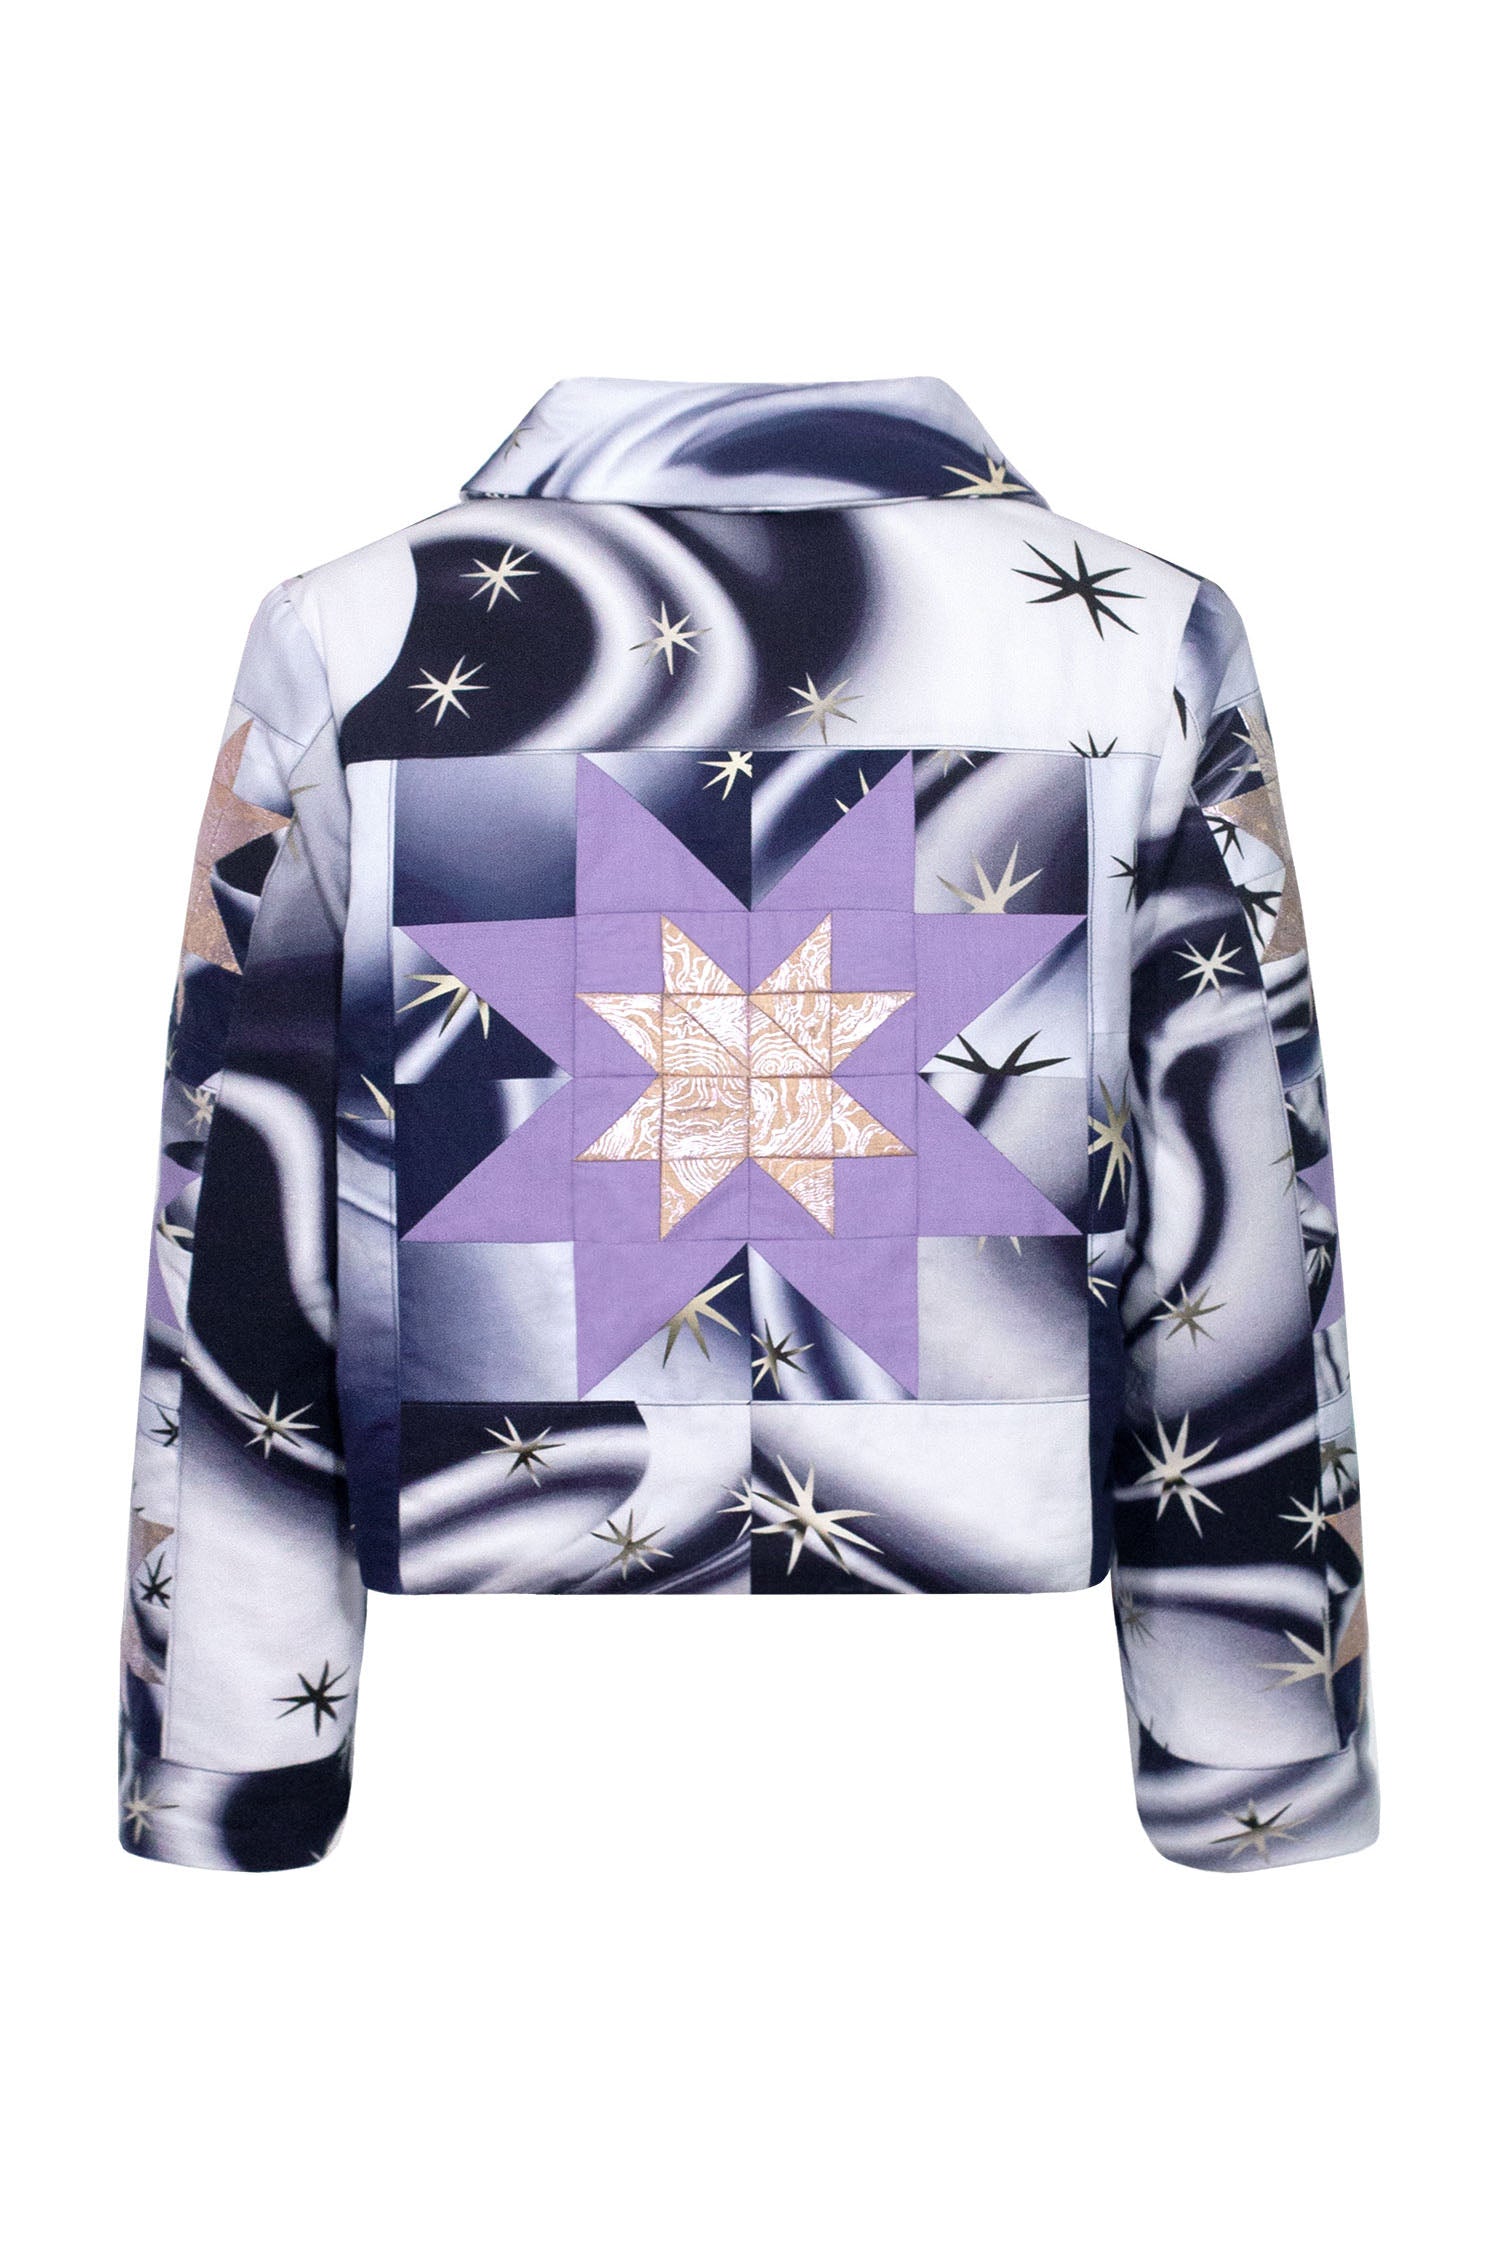 Heirloom jacket - design your own